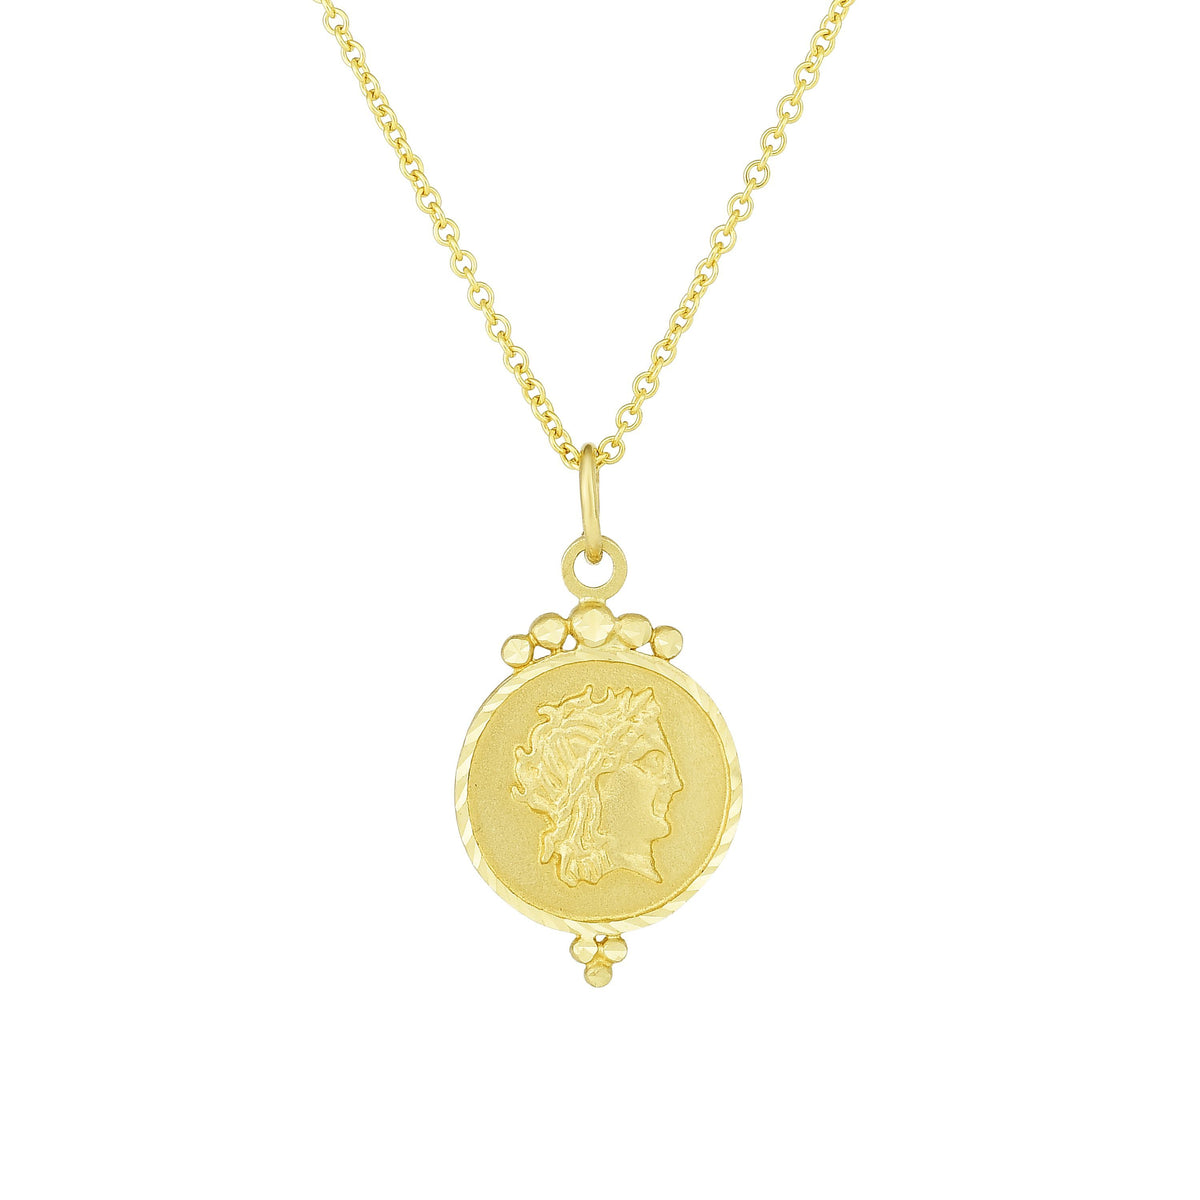 14k Yellow Gold Roman Coin Pendant Necklace, 18"